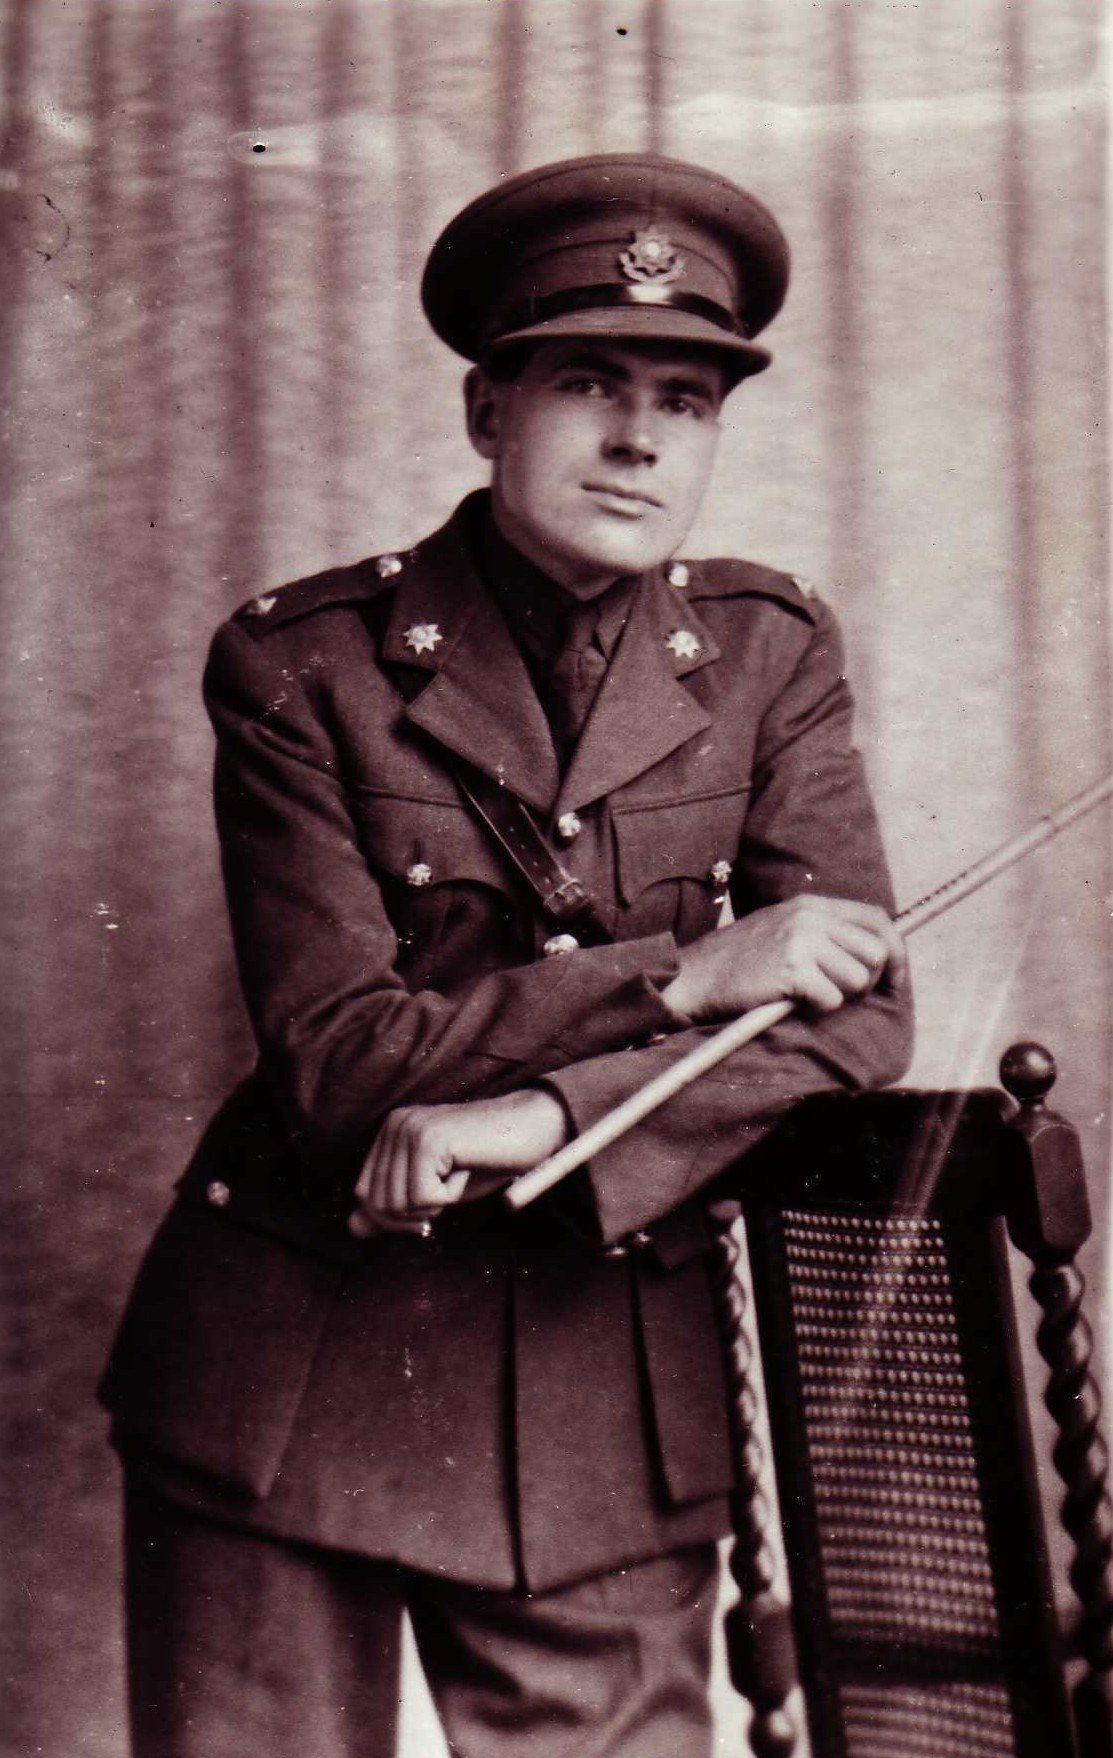 Dan Billany in uniform 1941